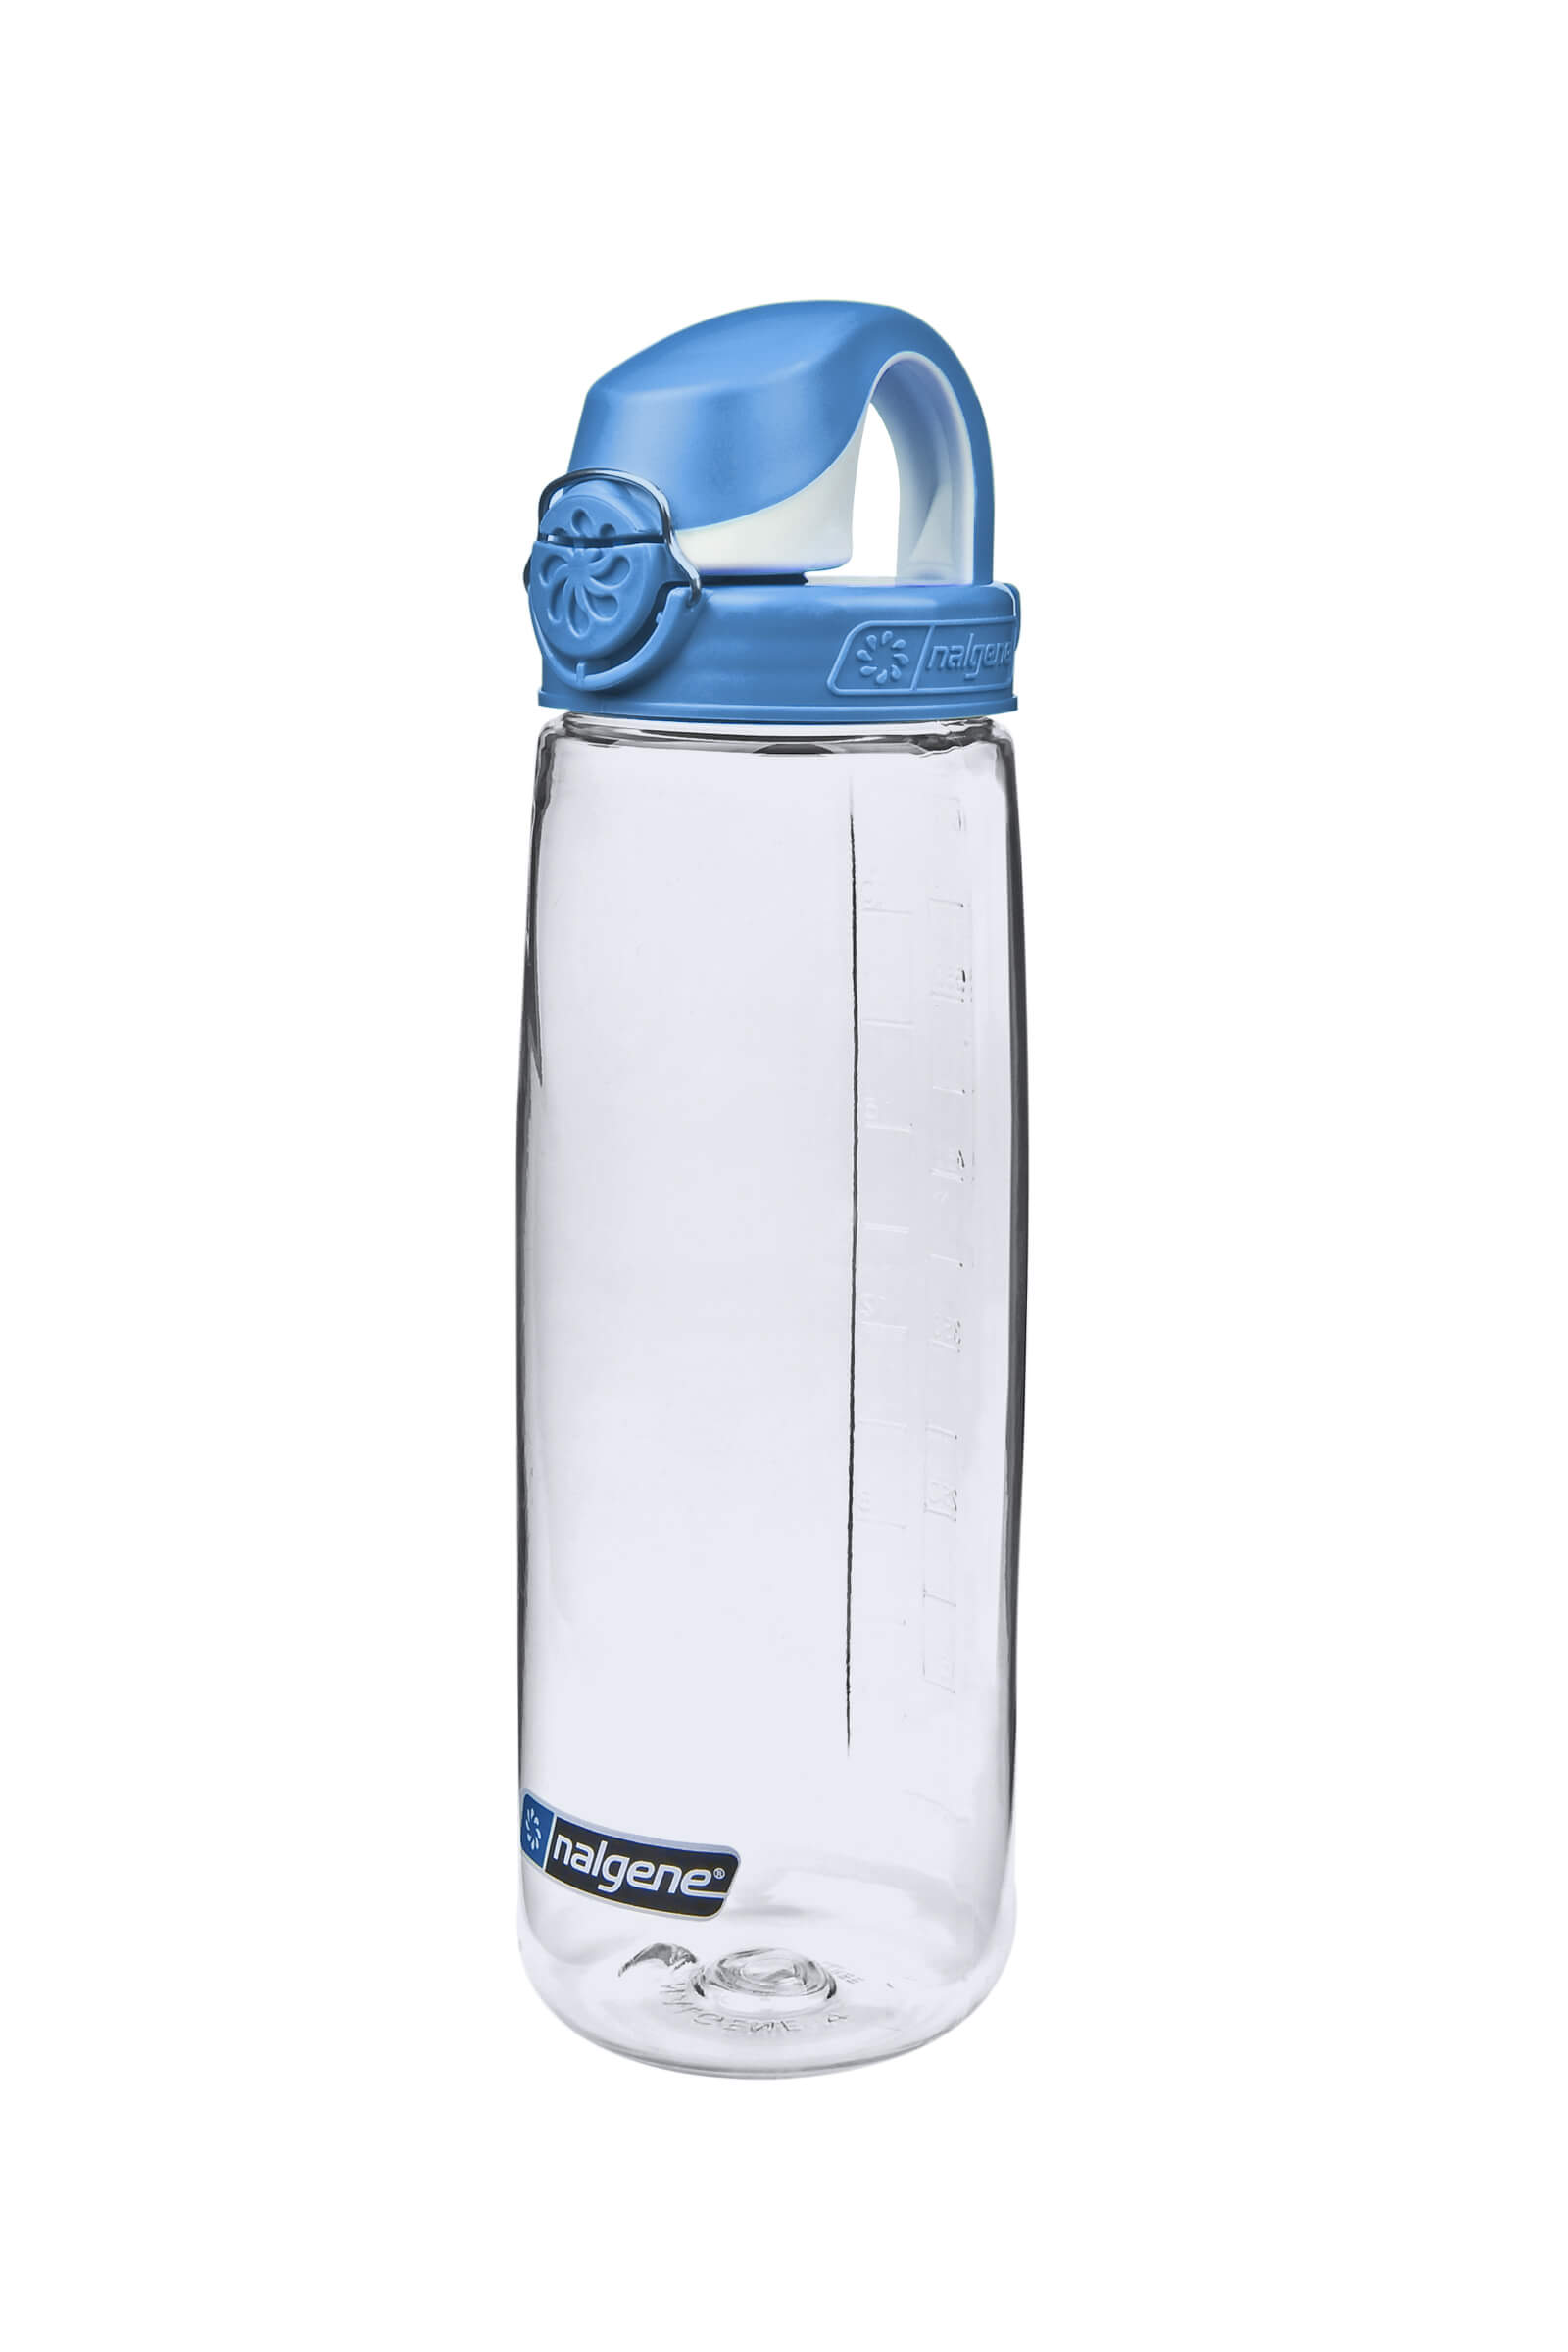 Blue" for sale online "Nalgene 5565-5024 Tritan On The Fly Water Bottle 